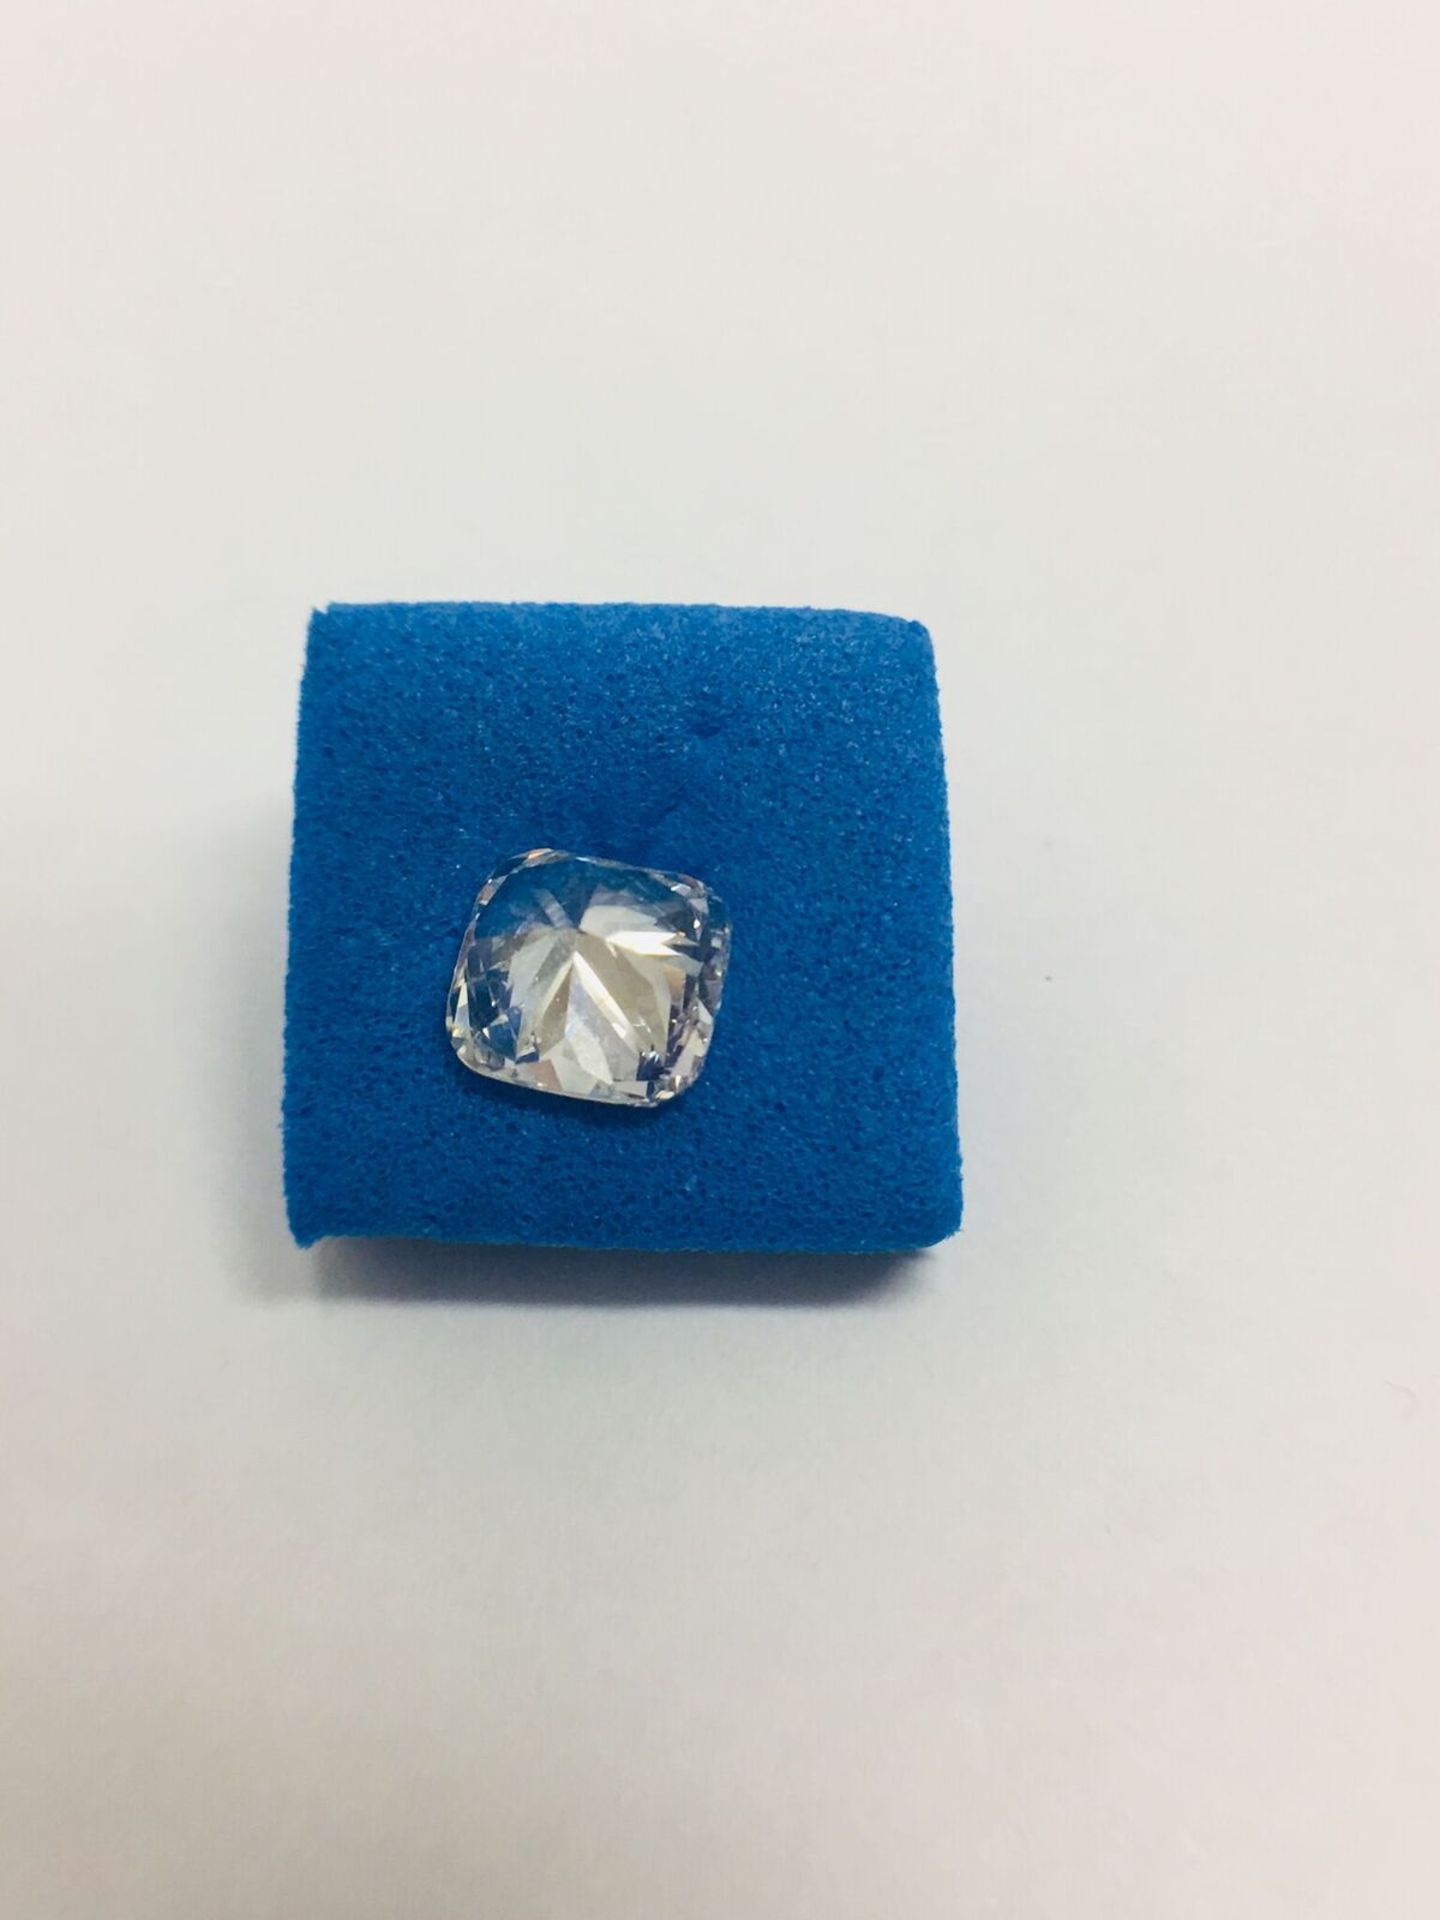 1.00ct Cushion Cut Natural Diamond - Image 2 of 2